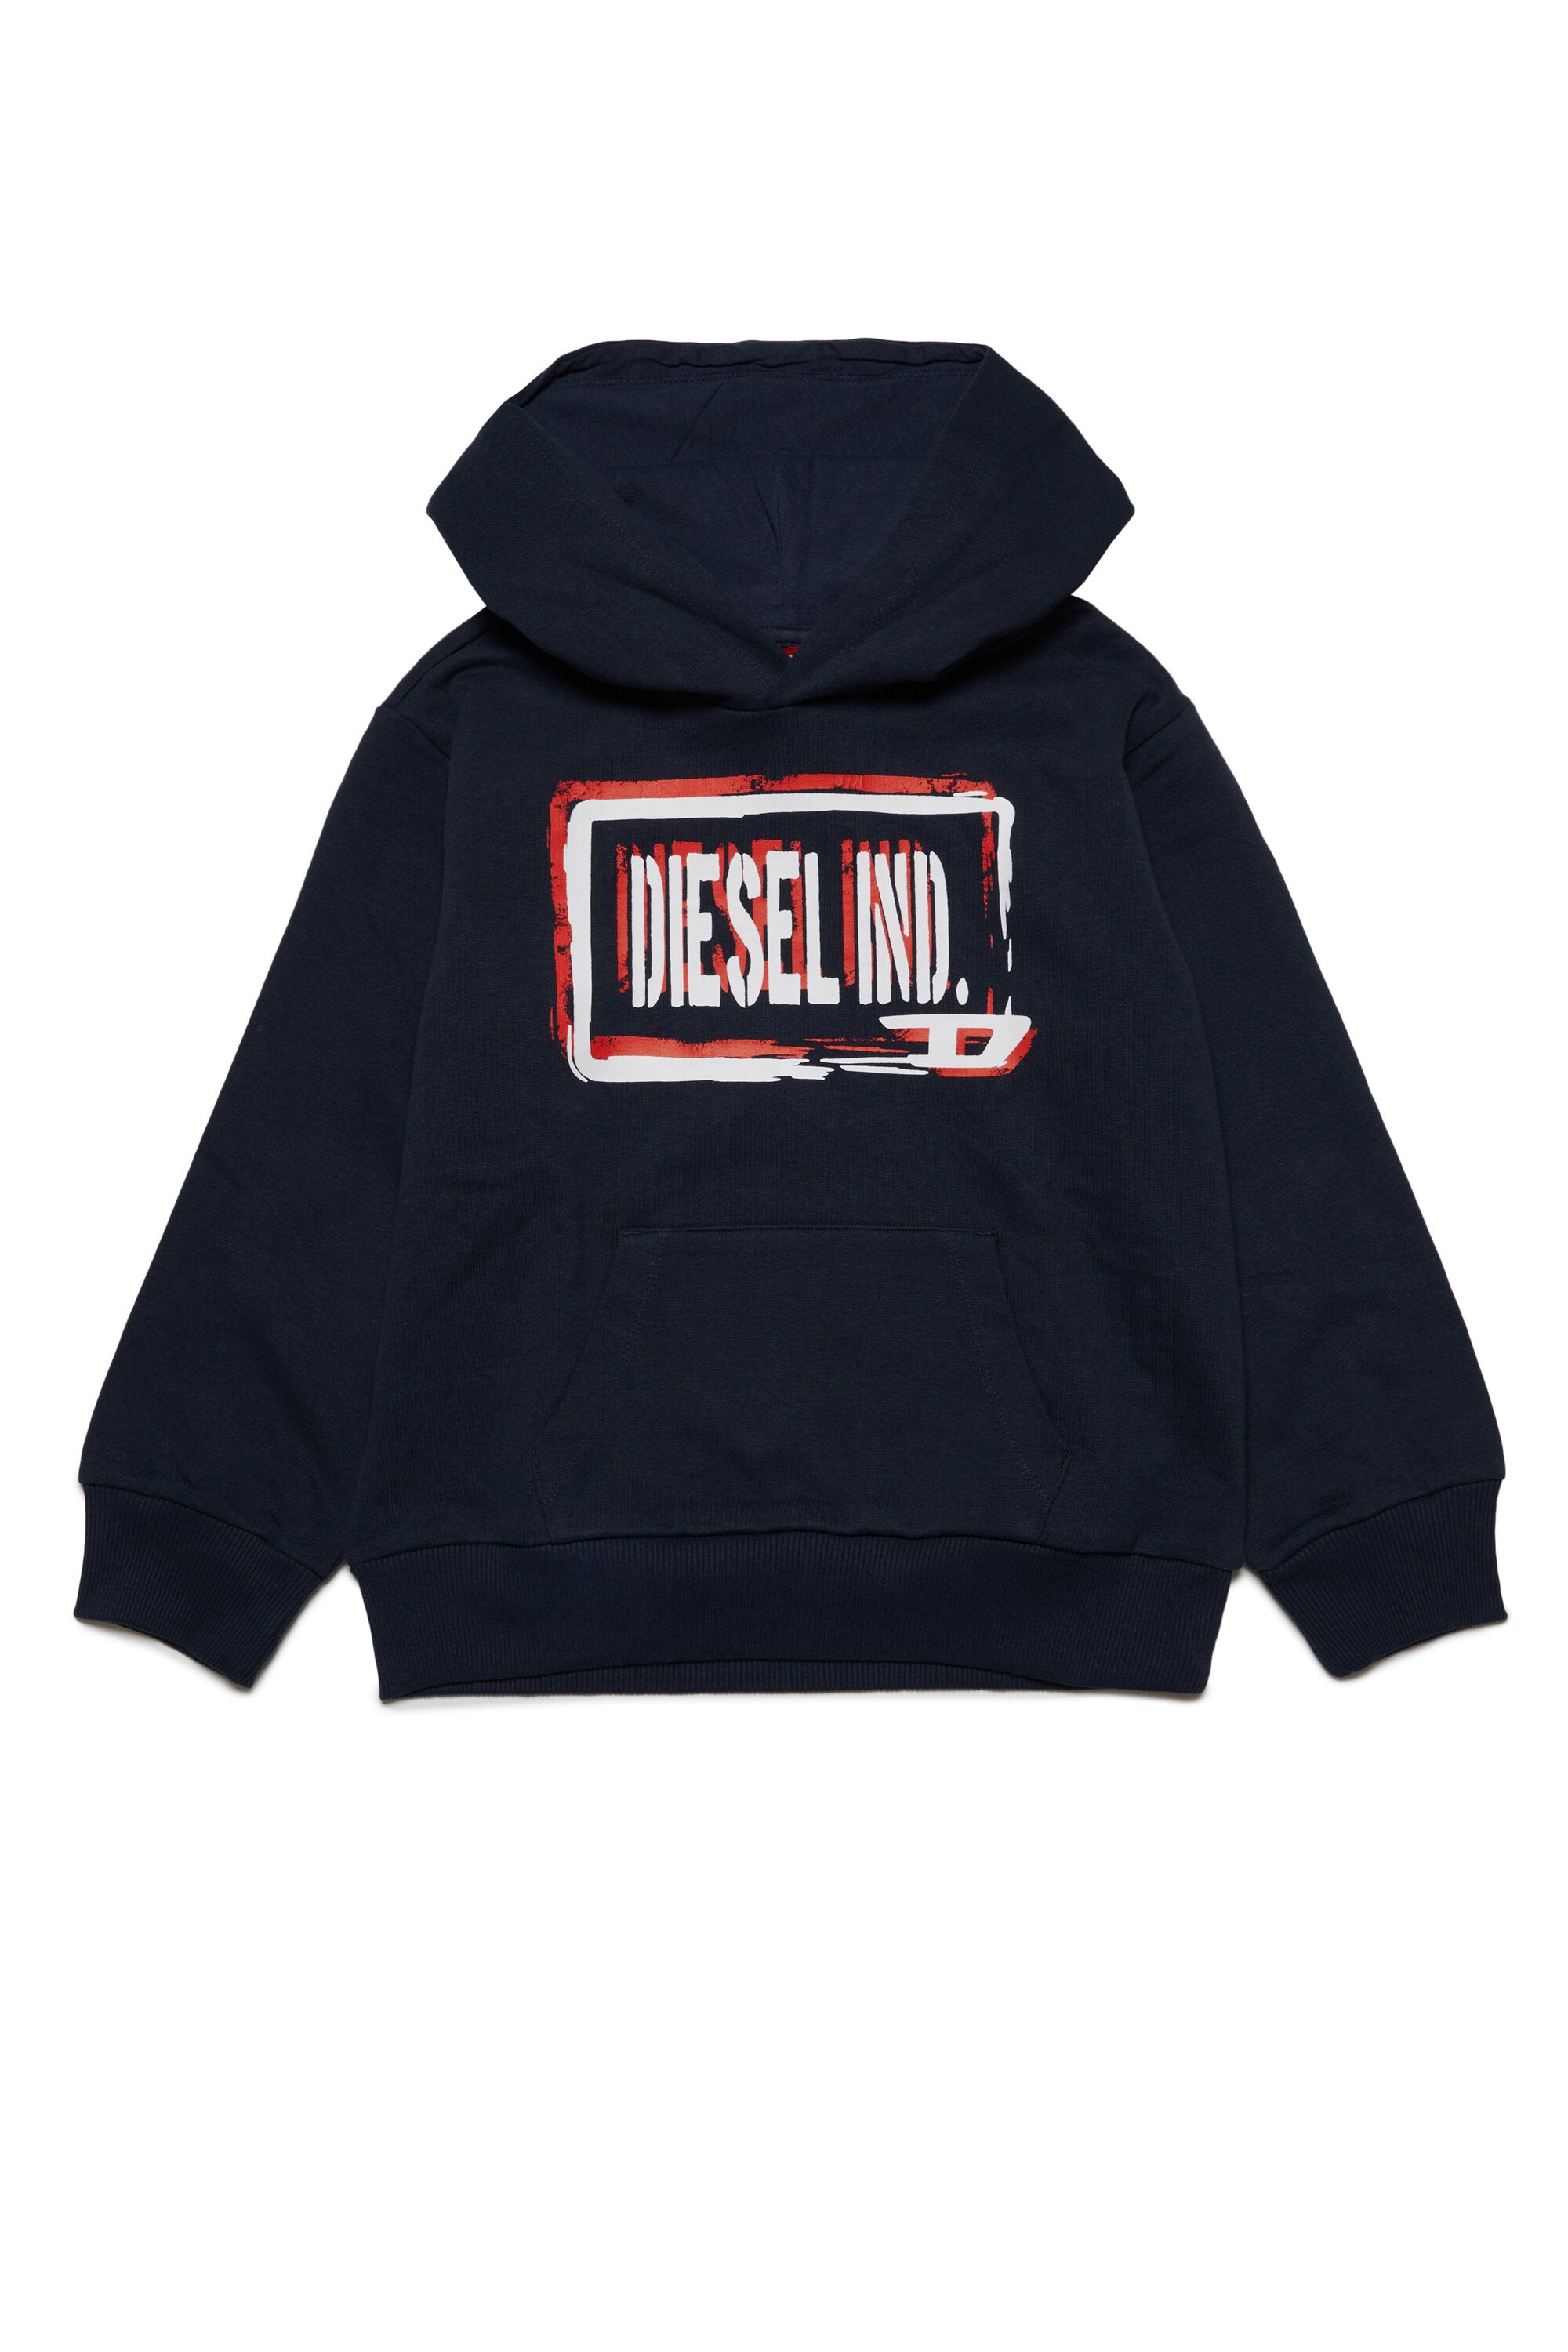 Diesel Ind.グラフィック入りボーイズフード付きスウェットシャツ